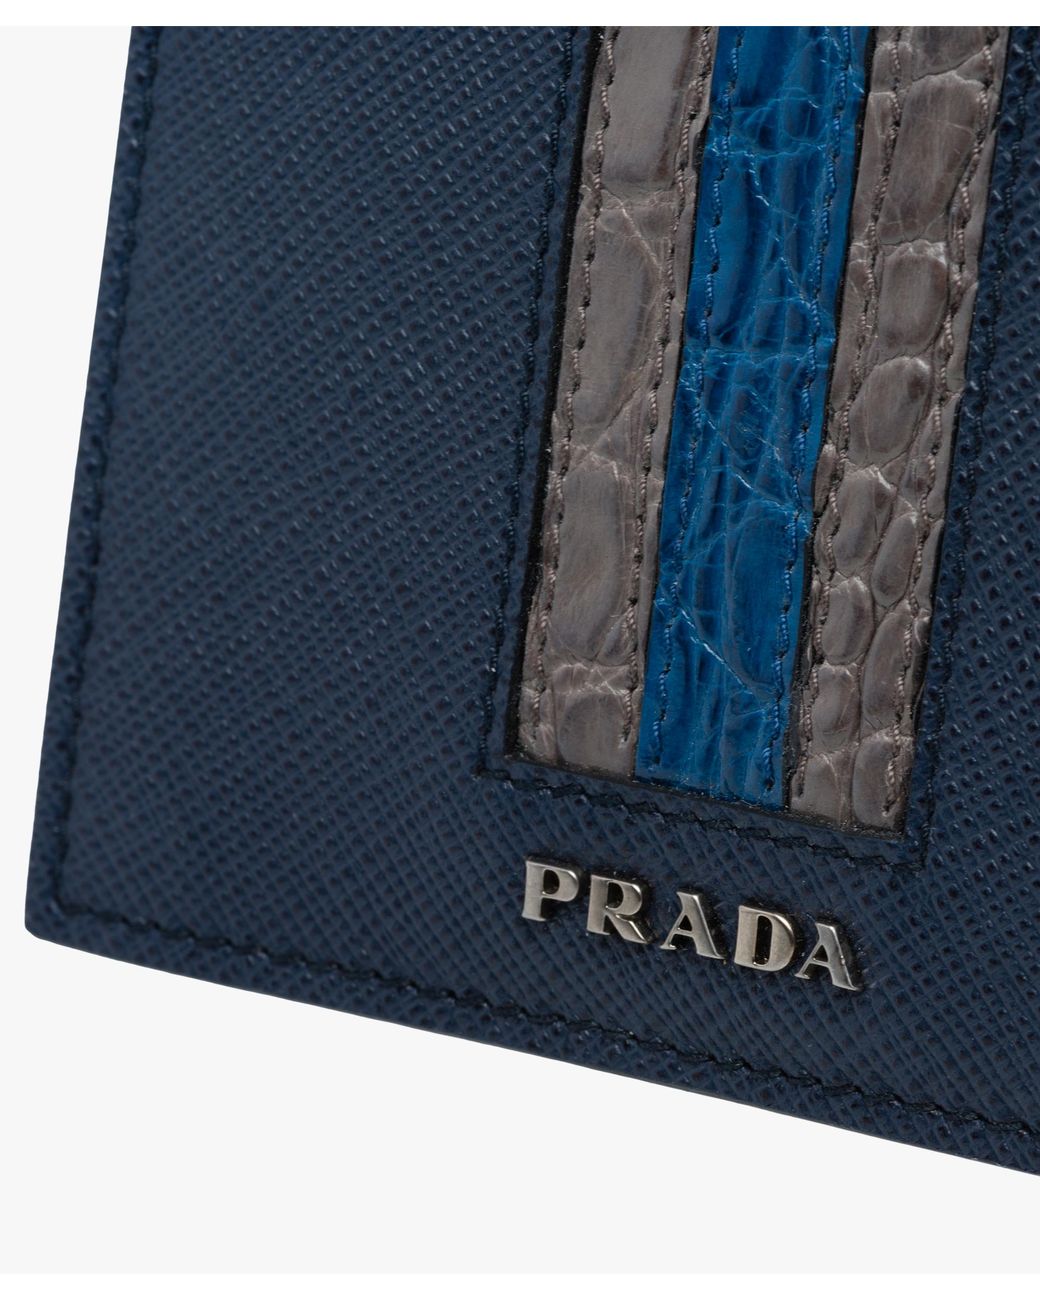 Prada Saffiano And Crocodile Leather Wallet in Blue for Men